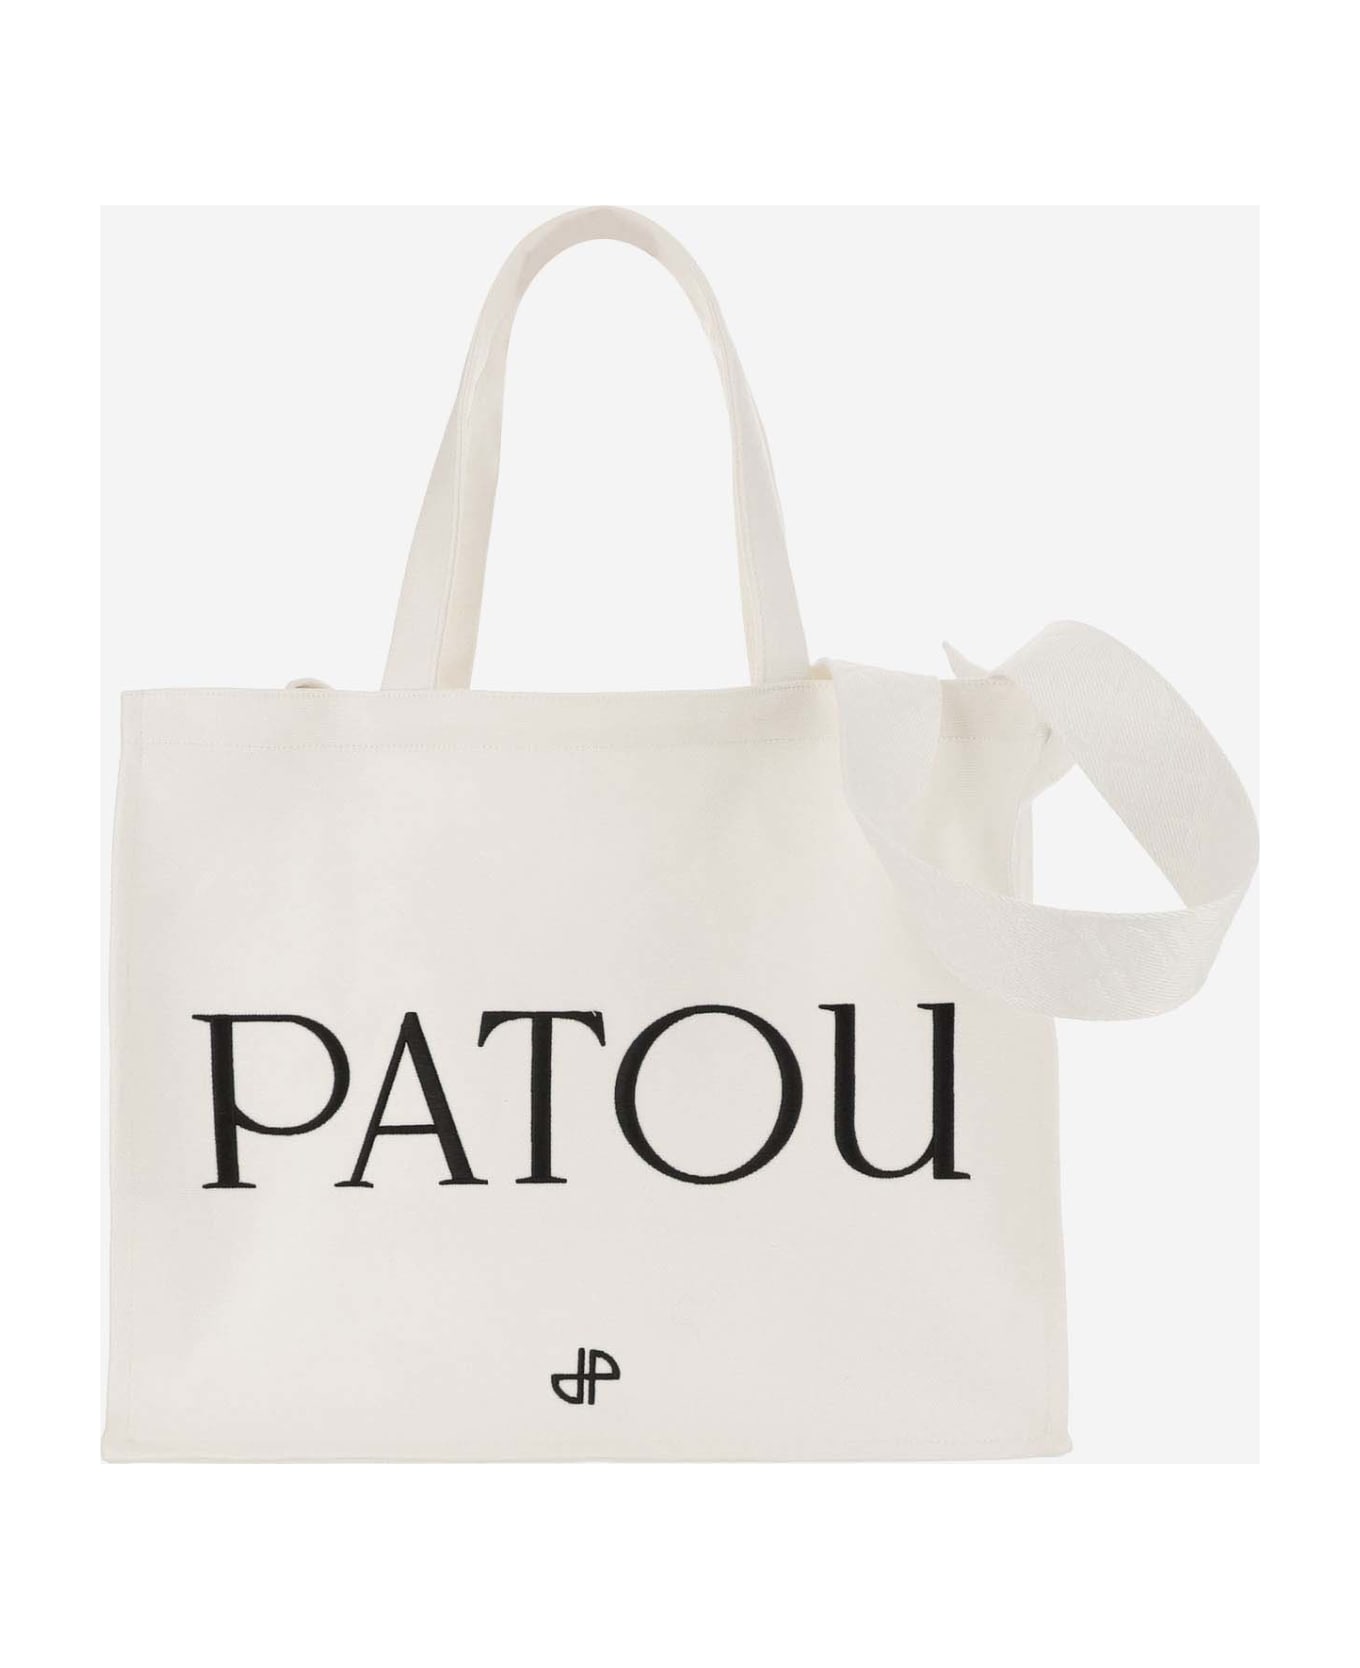 Patou Large Cotton Canvas Tote Bag - White トートバッグ